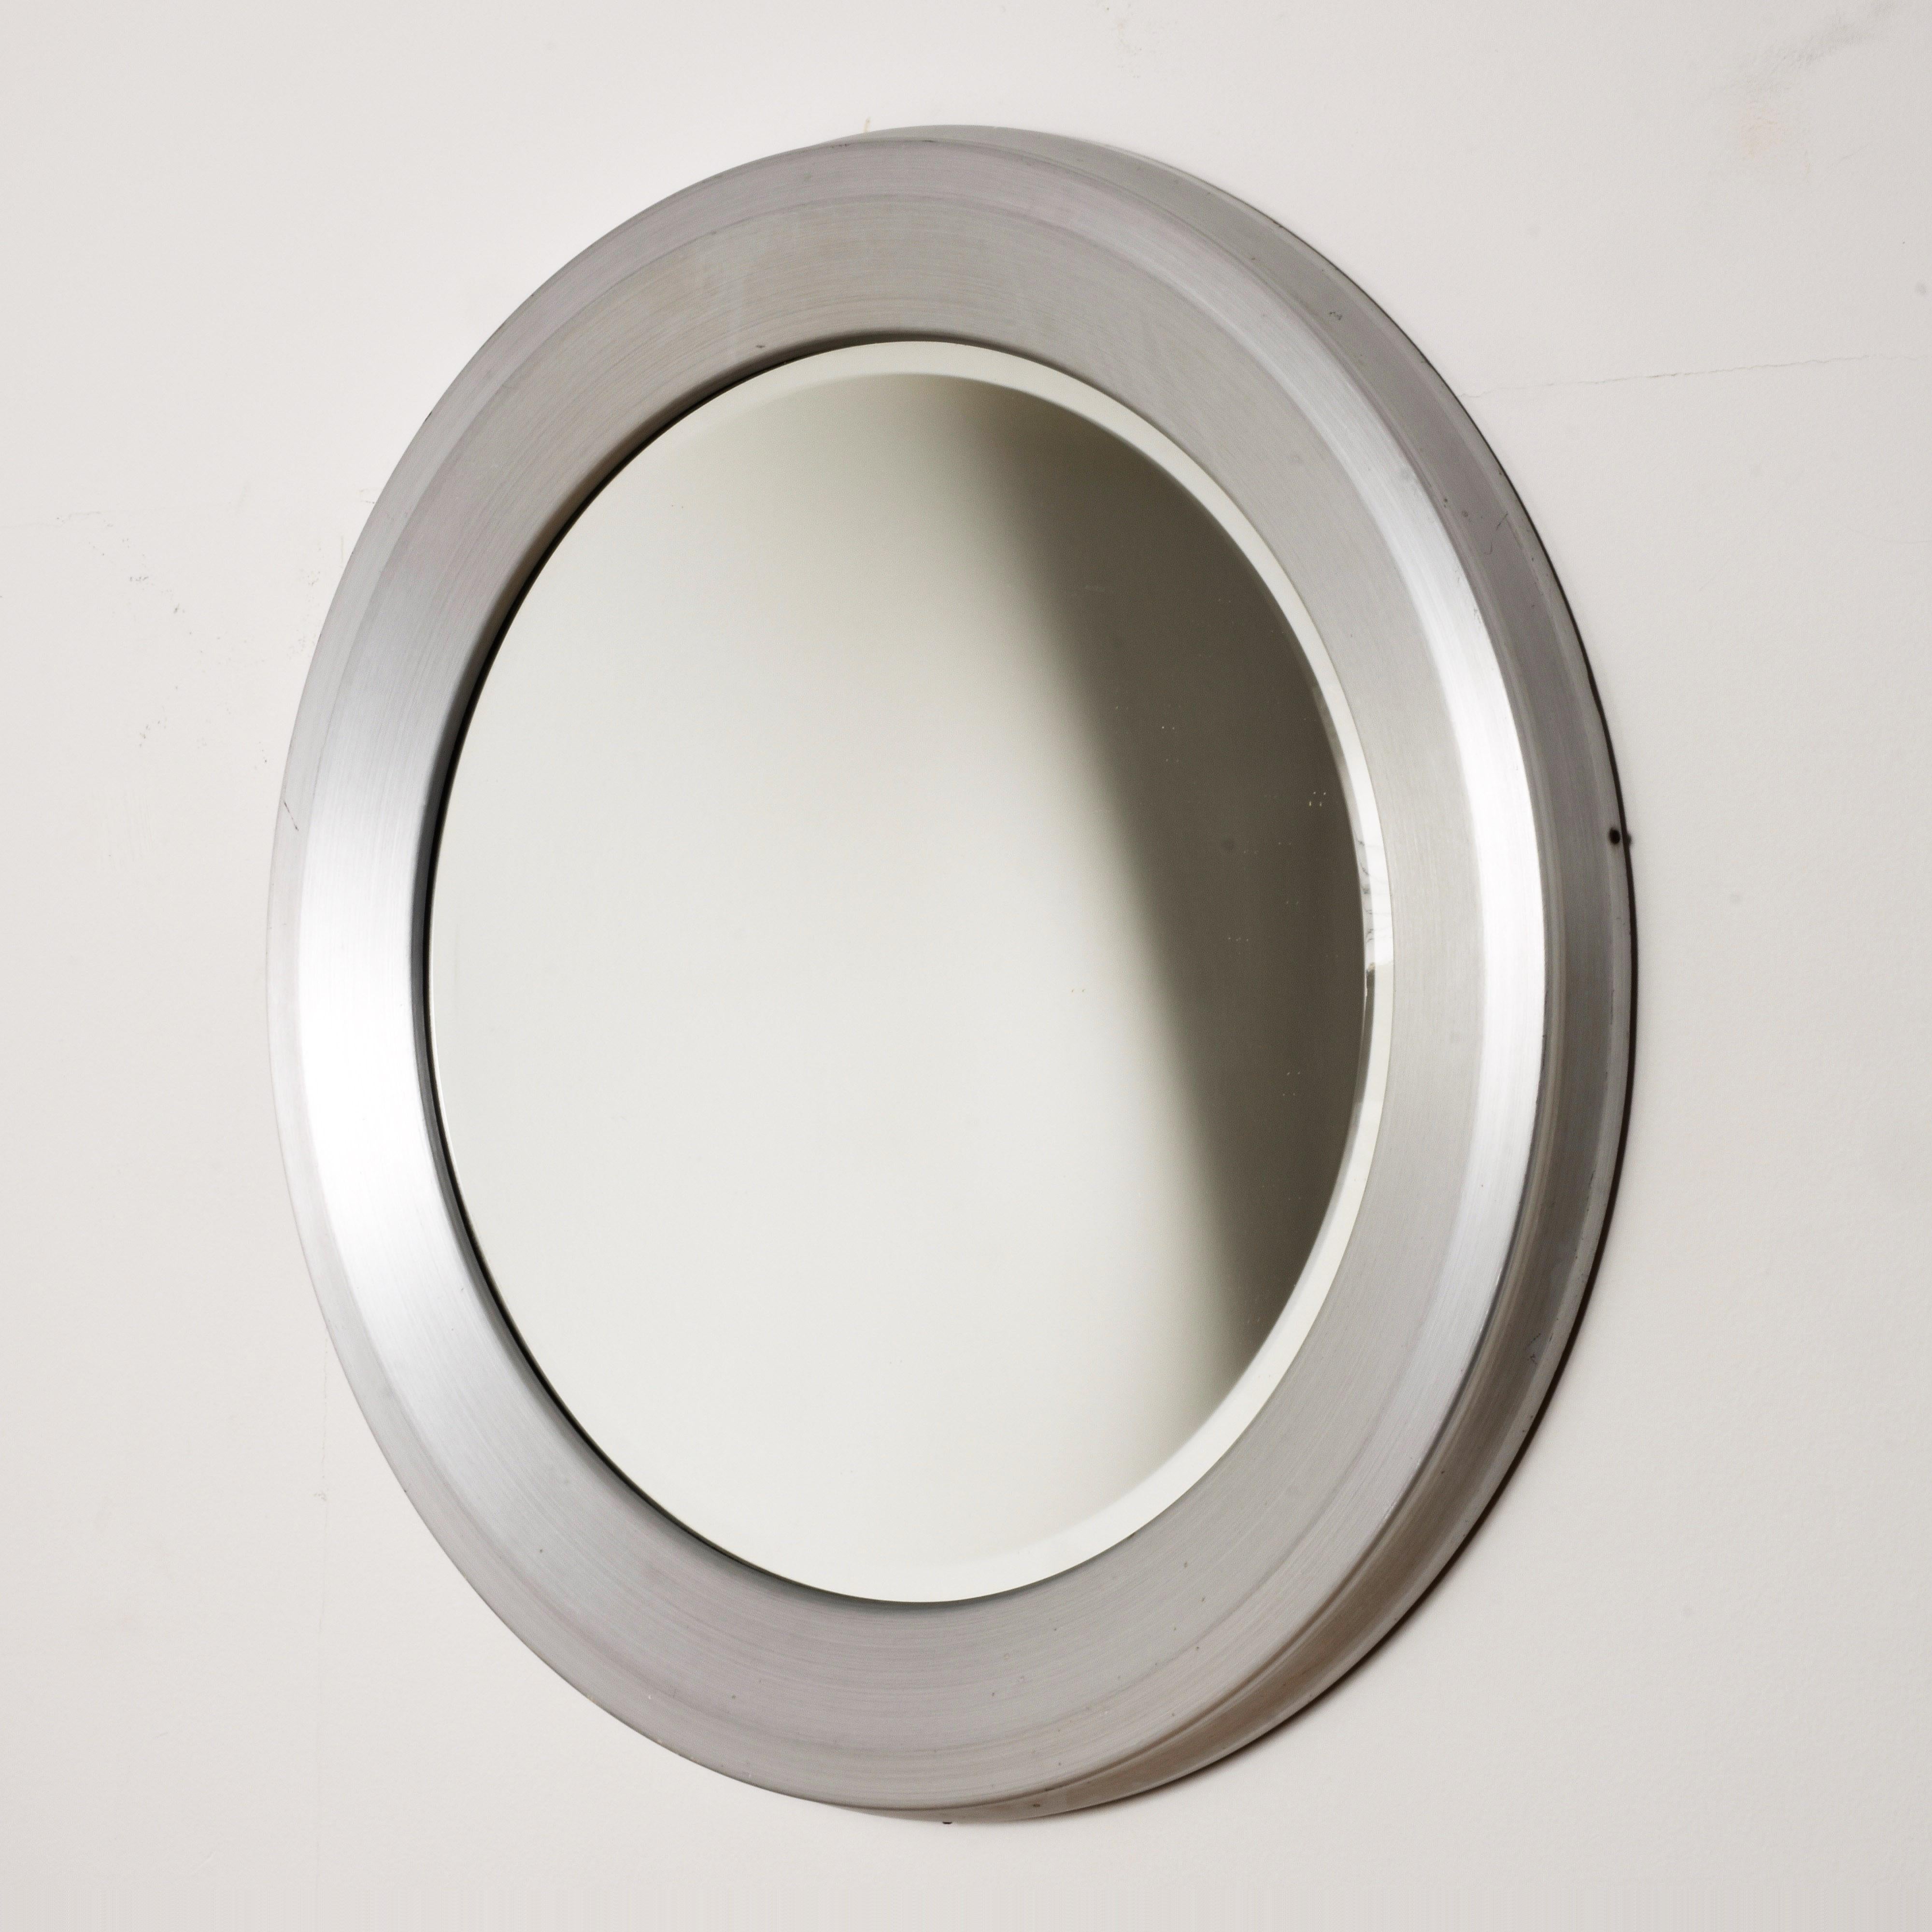 Mid-20th Century Round Beveled Mirror, Aluminum Frame, 1960s Midcentury, Italy, Artemide Style